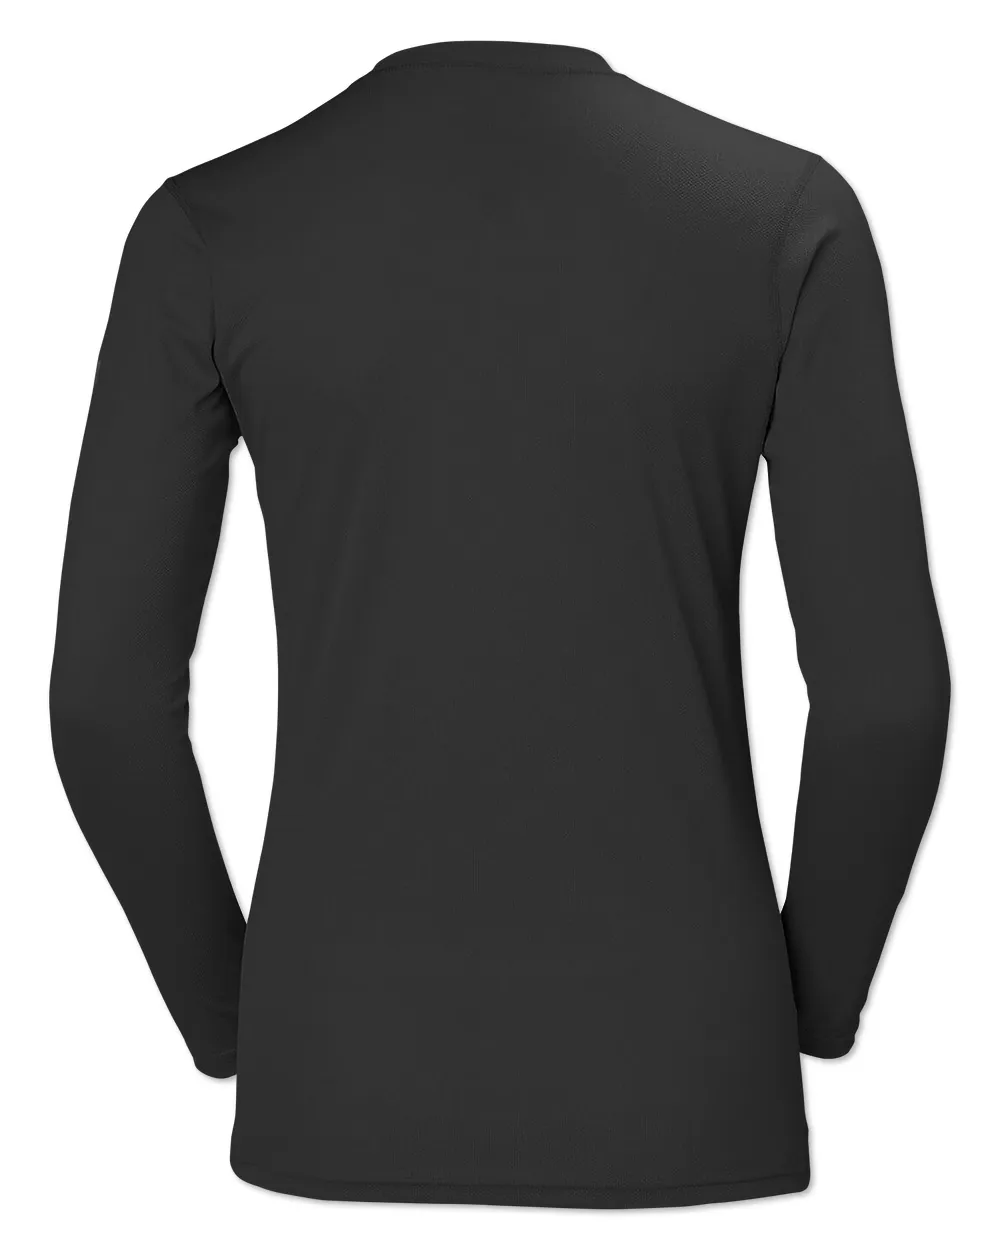 Unisex Long Sleeved T-Shirt